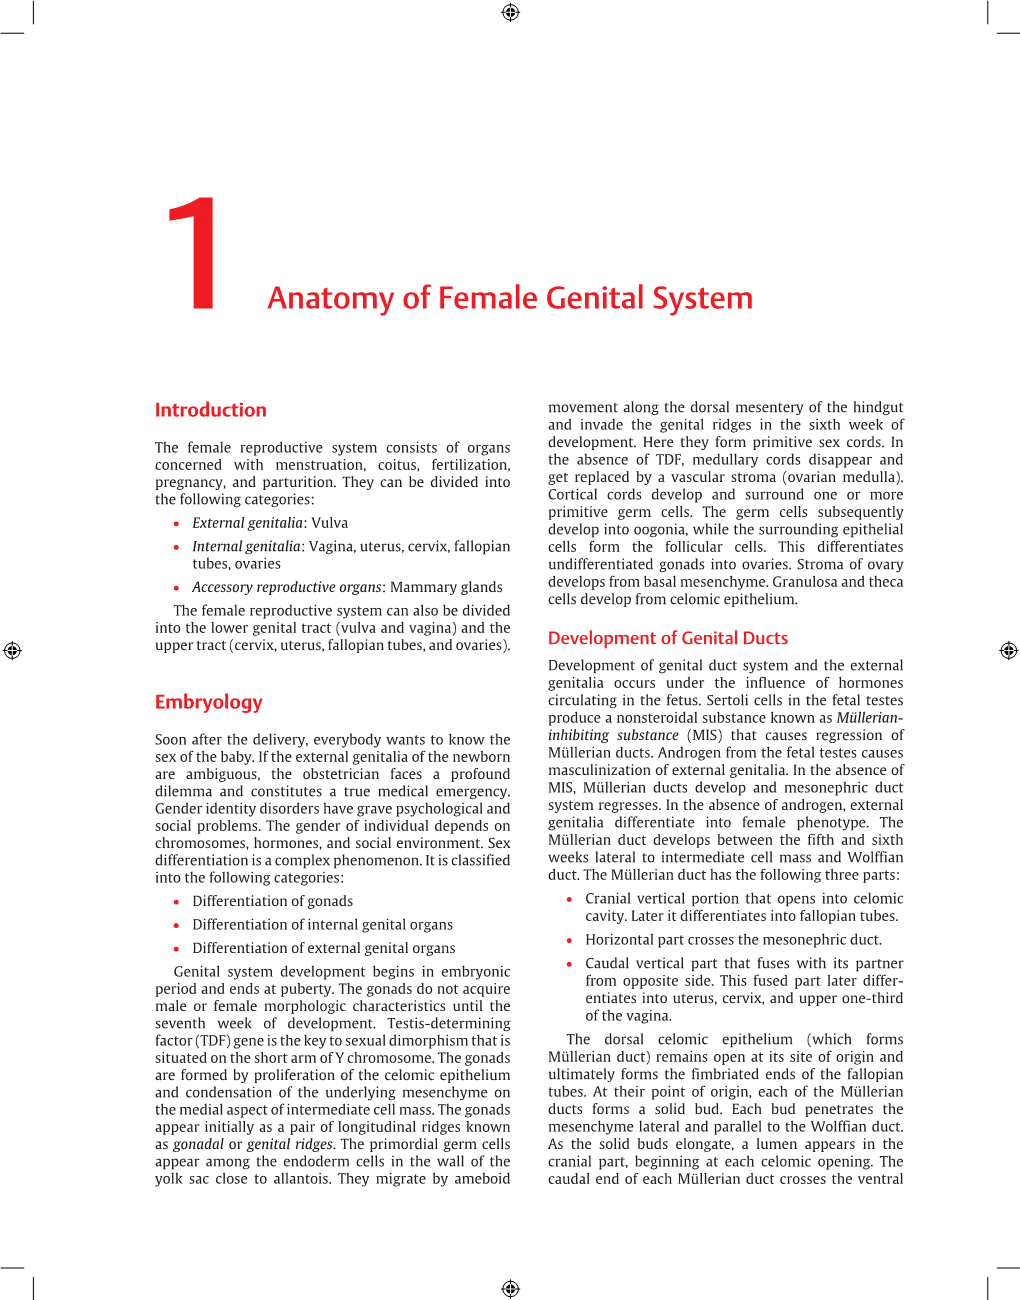 Anatomy of Female Genital System